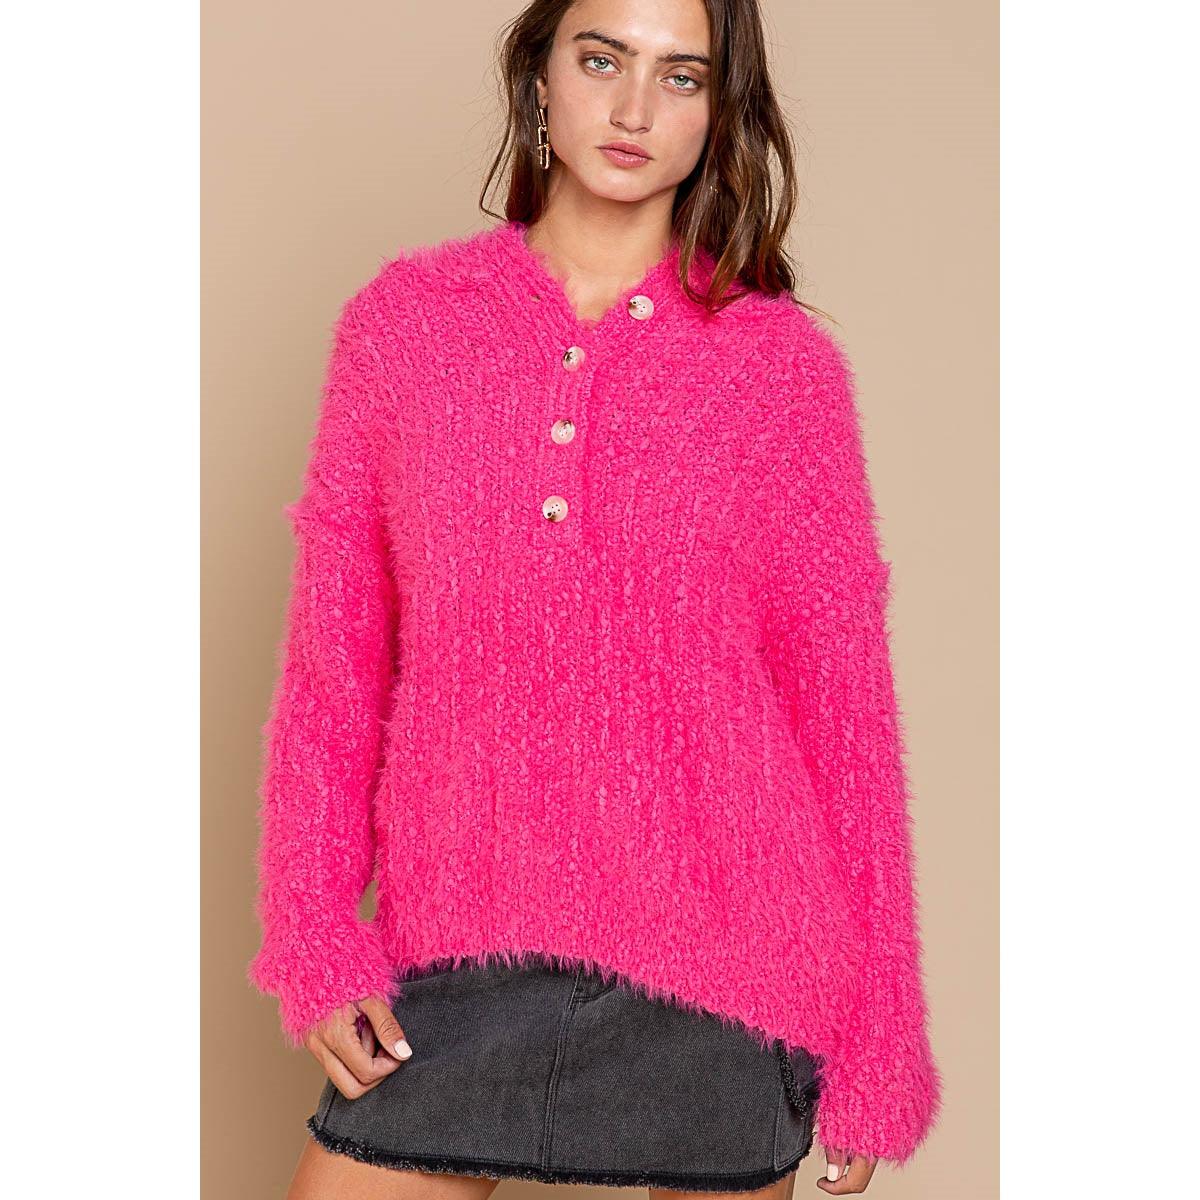 POL Winter Wonderland Super Soft Sweater - Heritage-Boutique.com